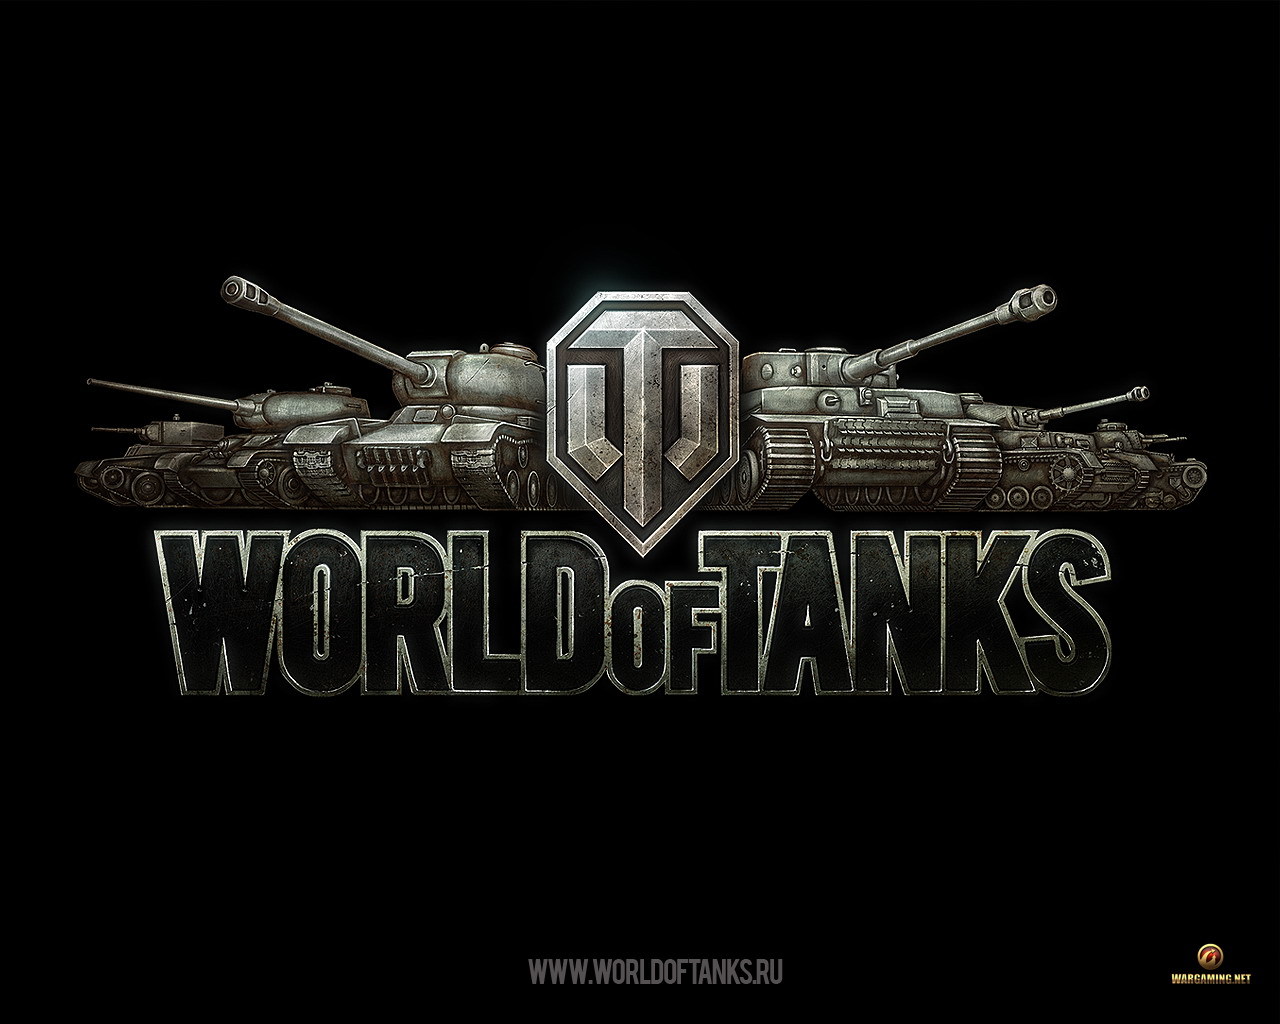 world of tanks, games, background, logos, black 32K